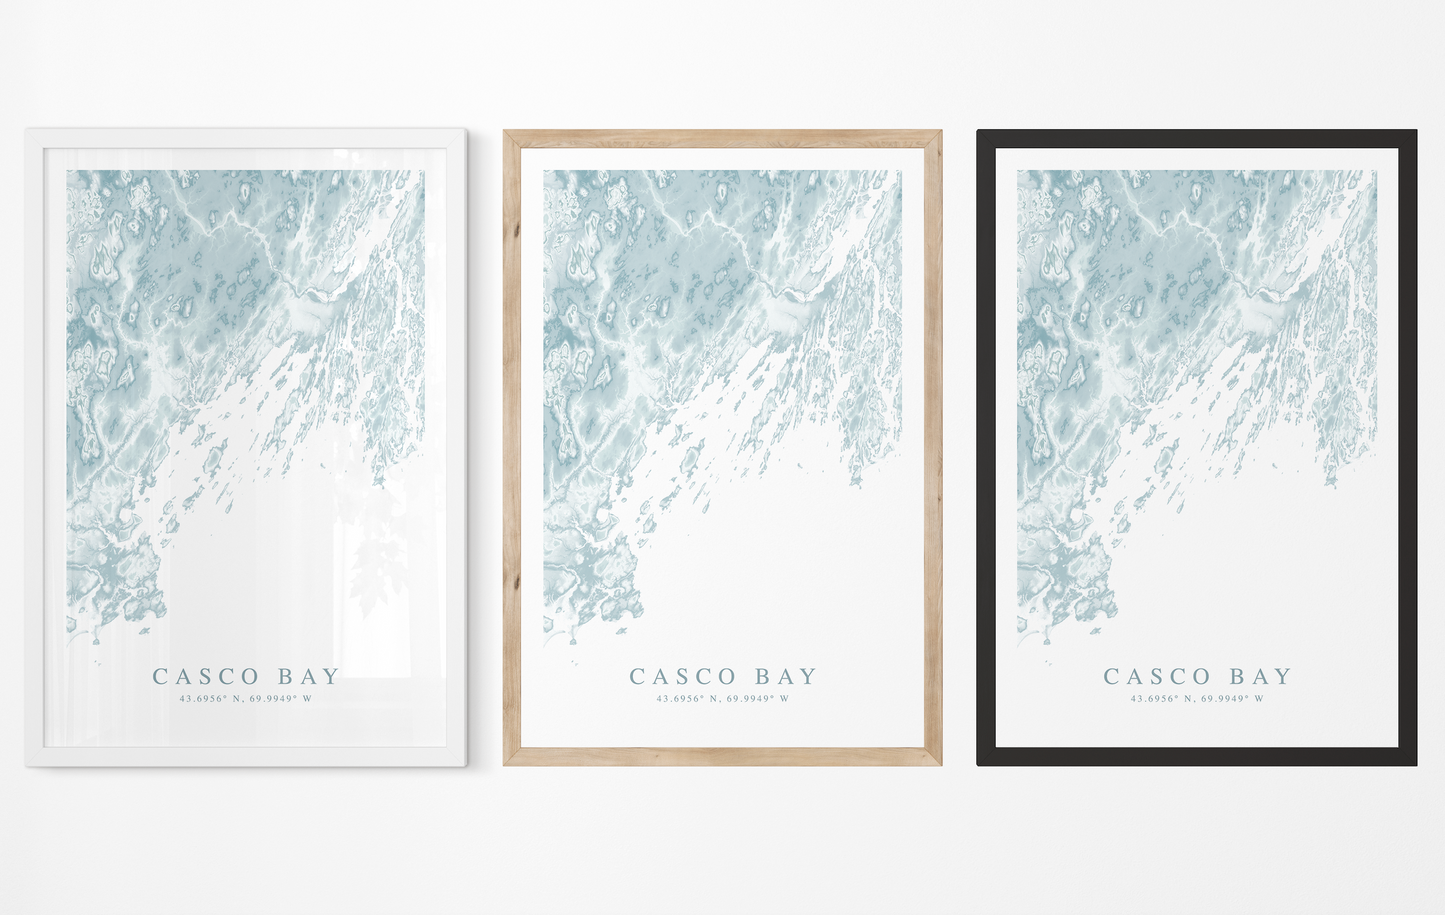 Casco Bay Map Print